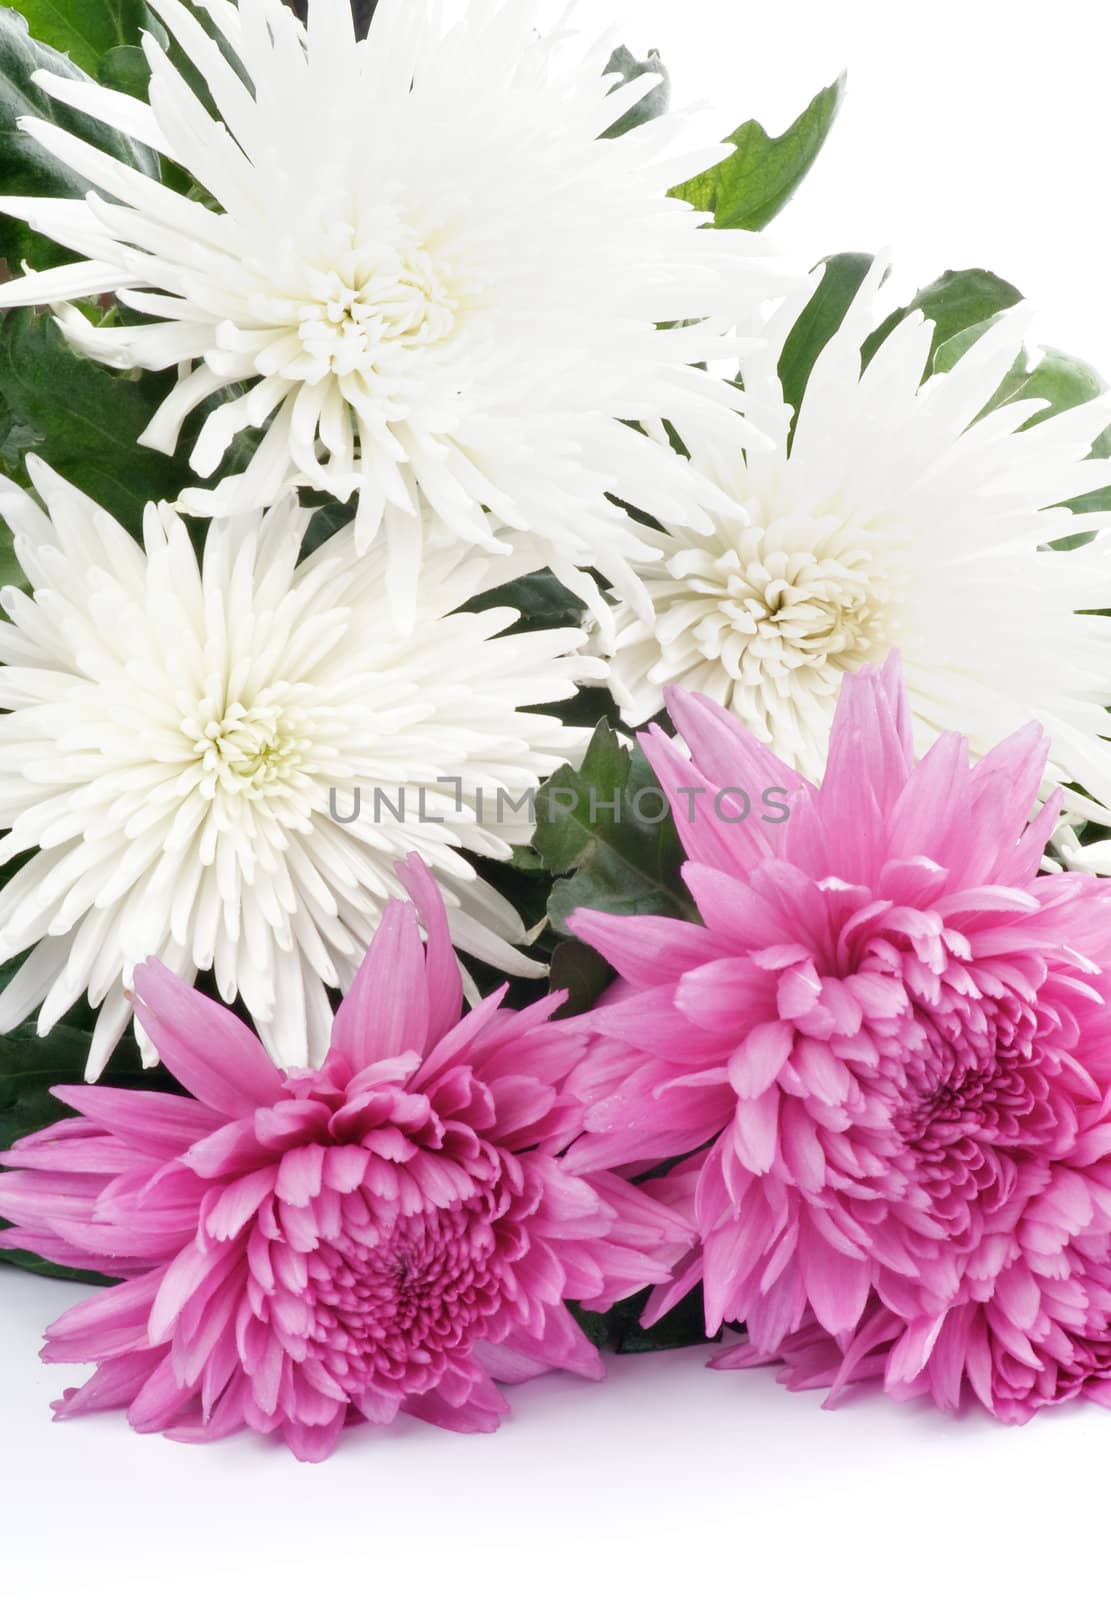 Beautiful Pink and White Chrysanthemum closeup on white background